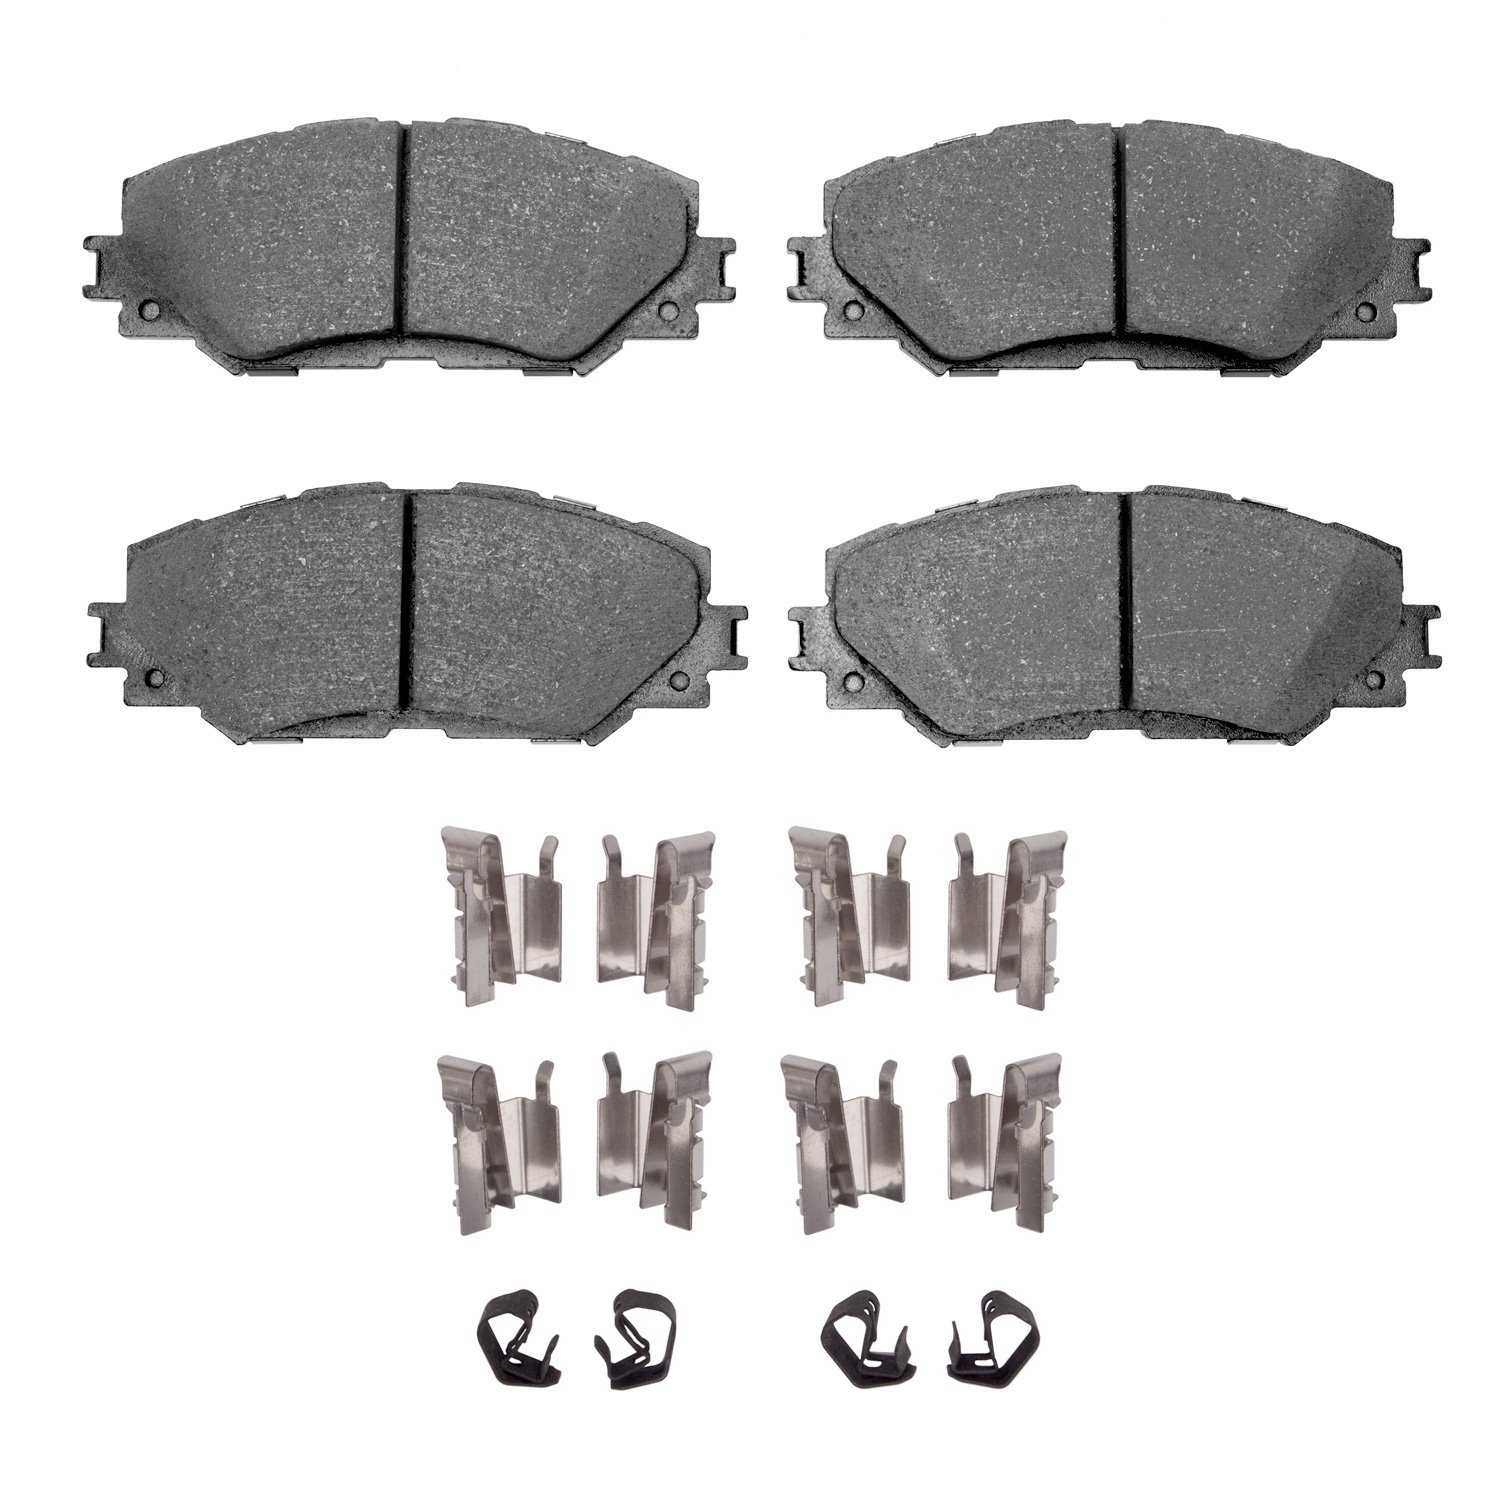 1310-1210-01 3000-Series Ceramic Brake Pads & Hardware Kit, 2006-2019 Multiple Makes/Models, Position: Front